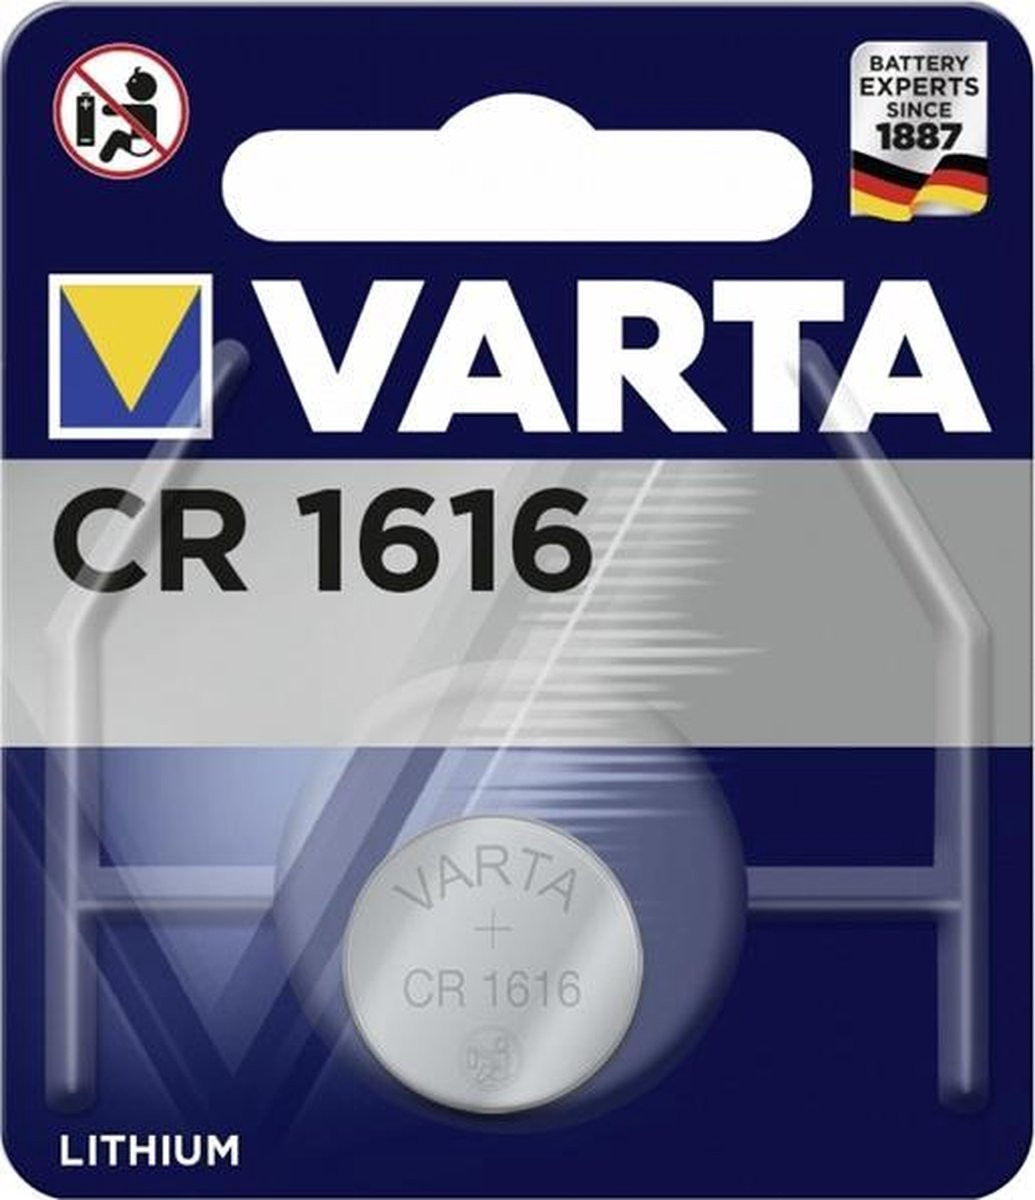 Varta electronic CR 1616